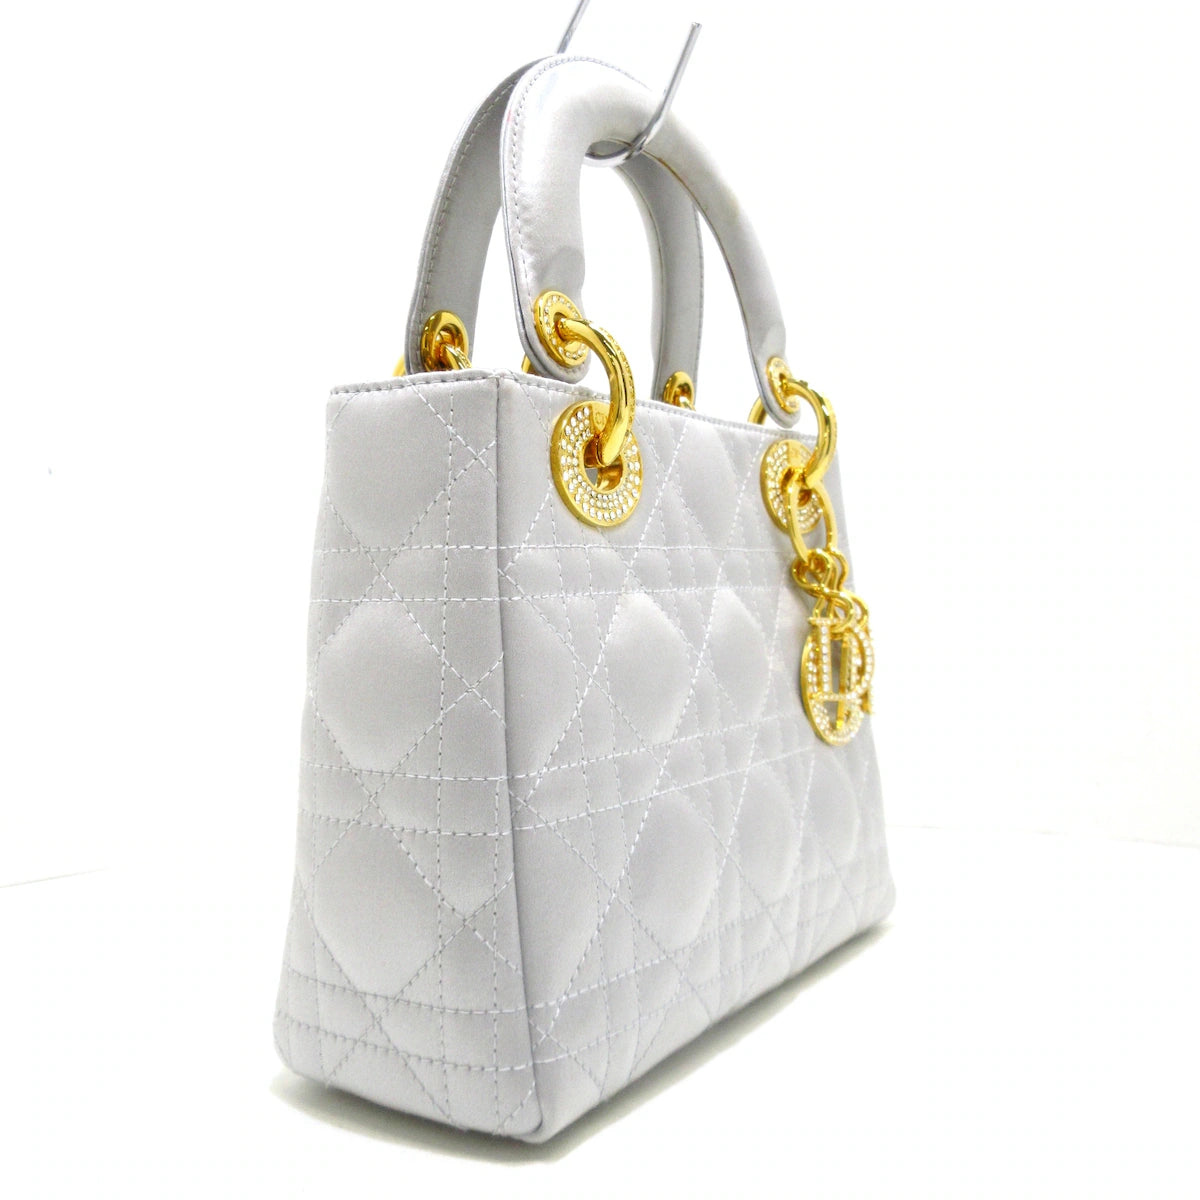 DIOR - Lady Dior Mini Bag Handbag Gray Satin